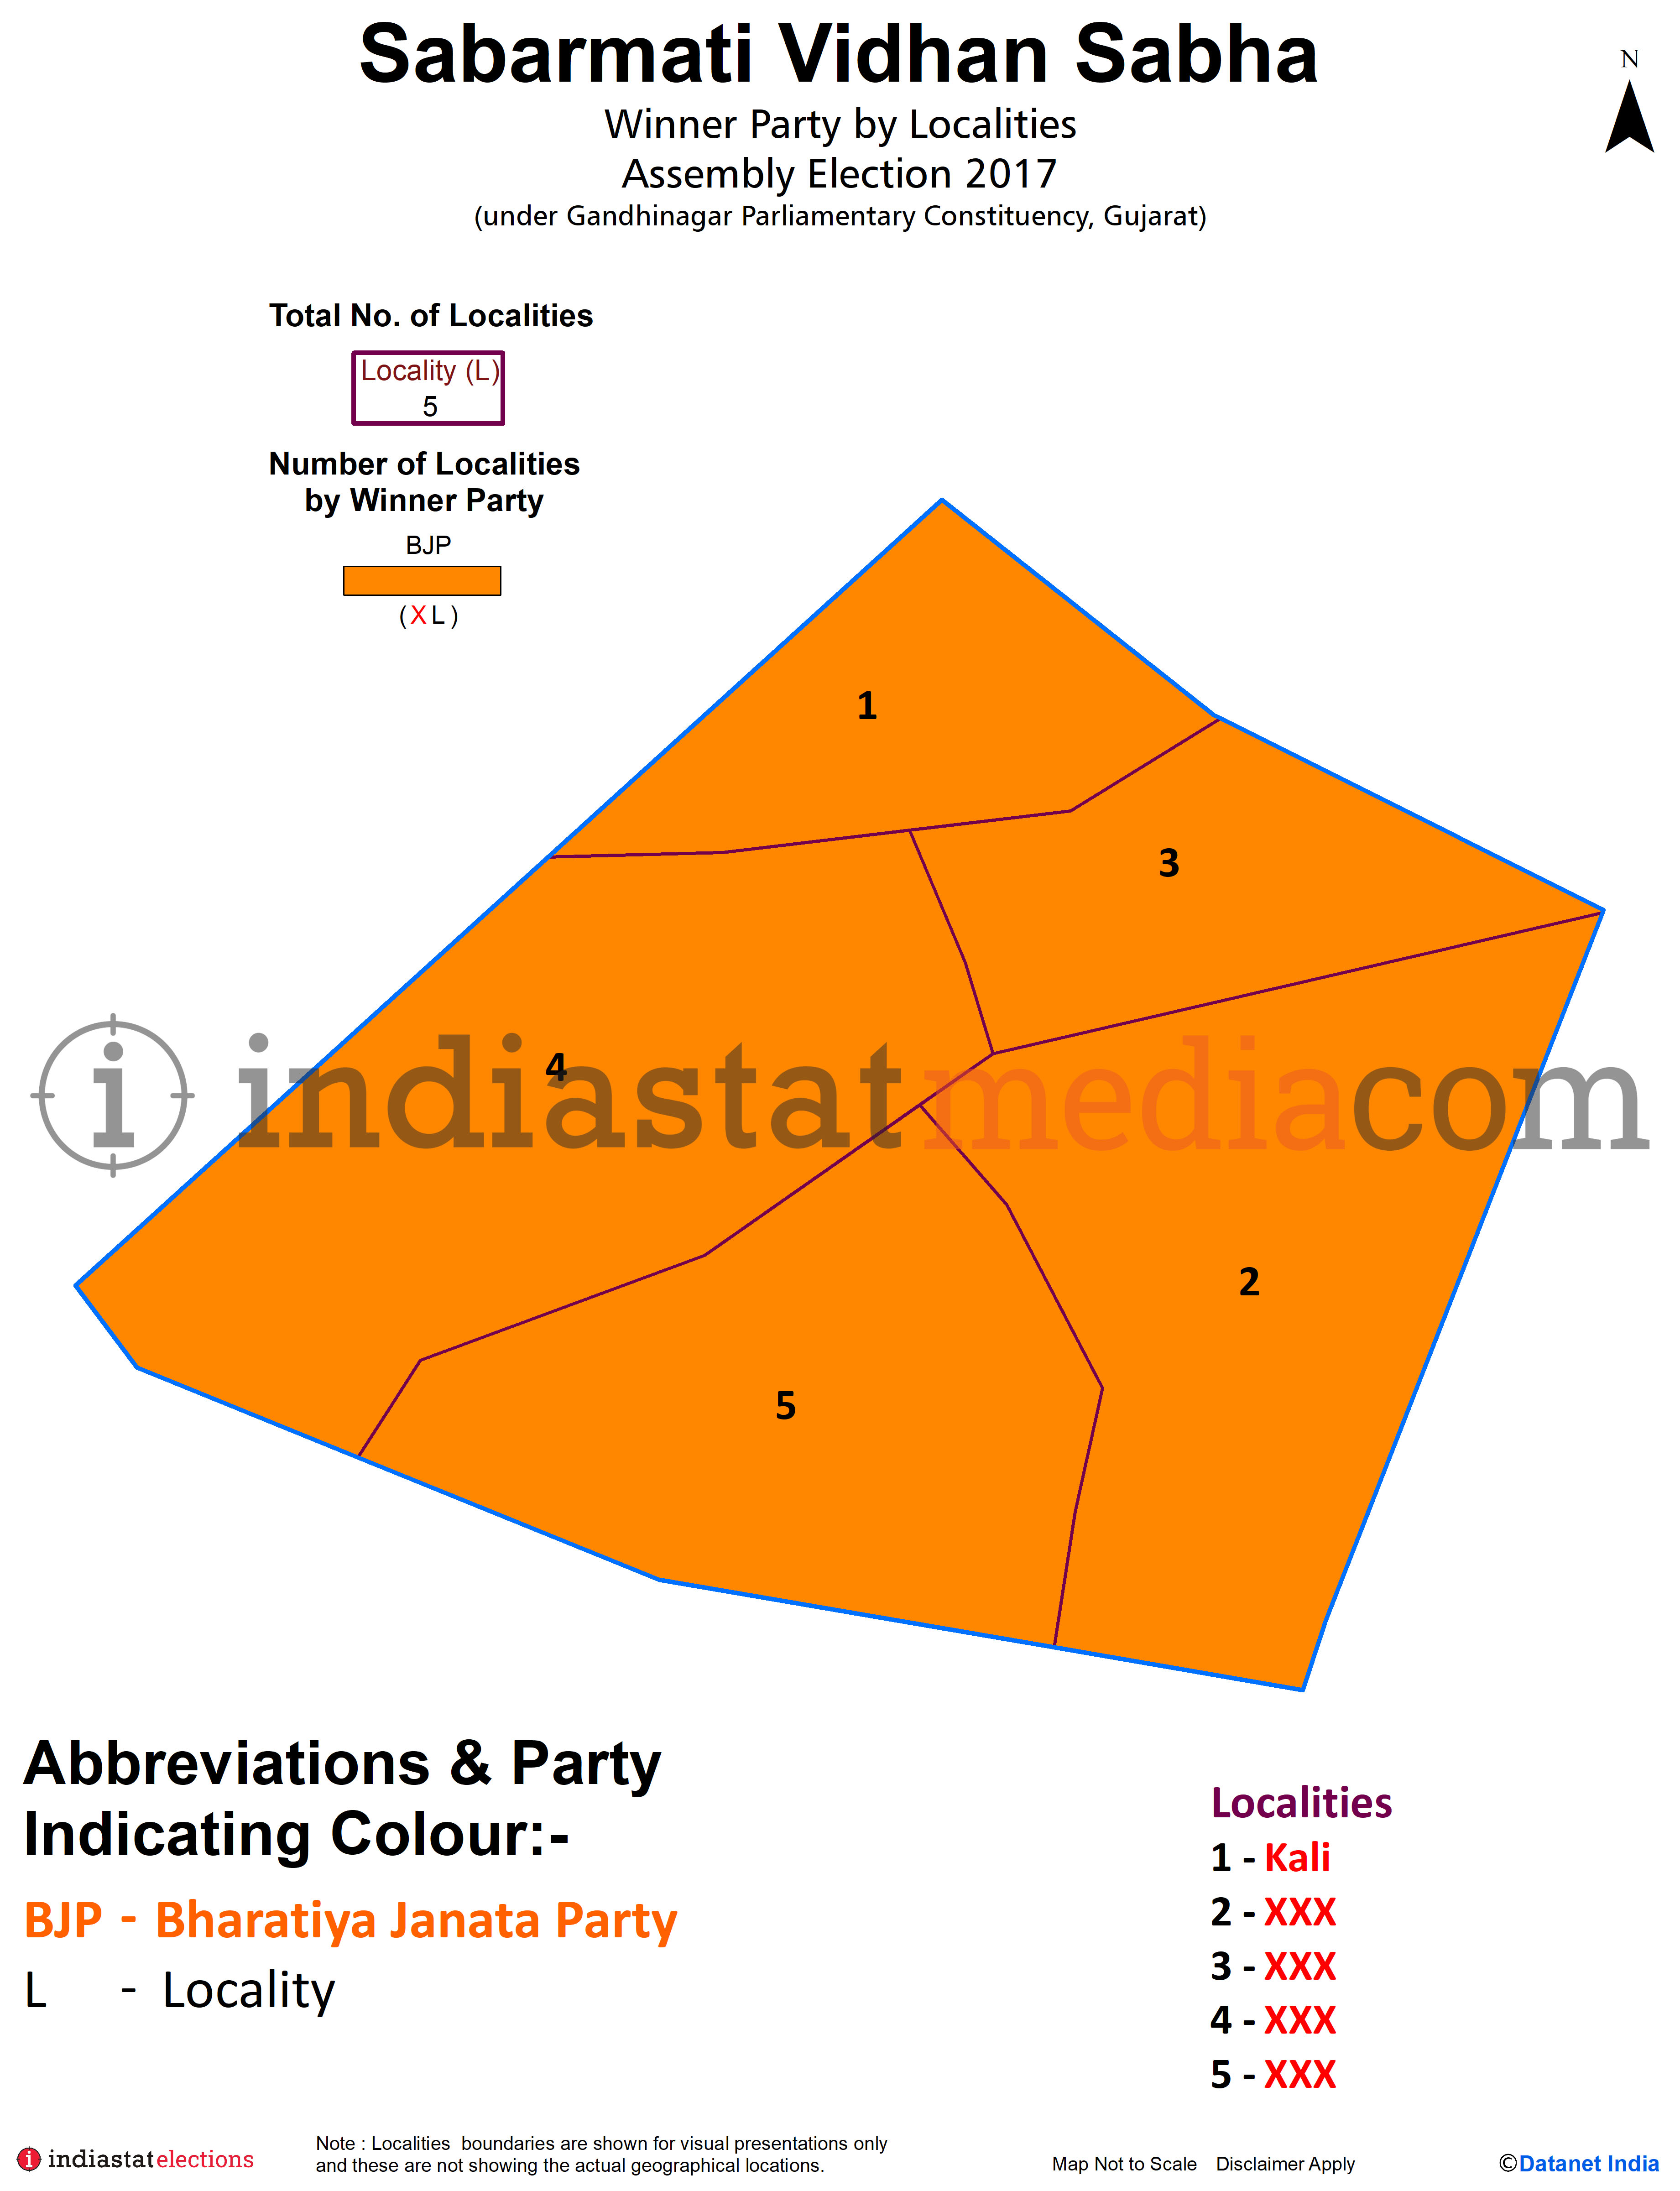 Winner Parties by Localities in Sabarmati Assembly Constituency under Gandhinagar Parliamentary Constituency in Gujarat (Assembly Election - 2017)